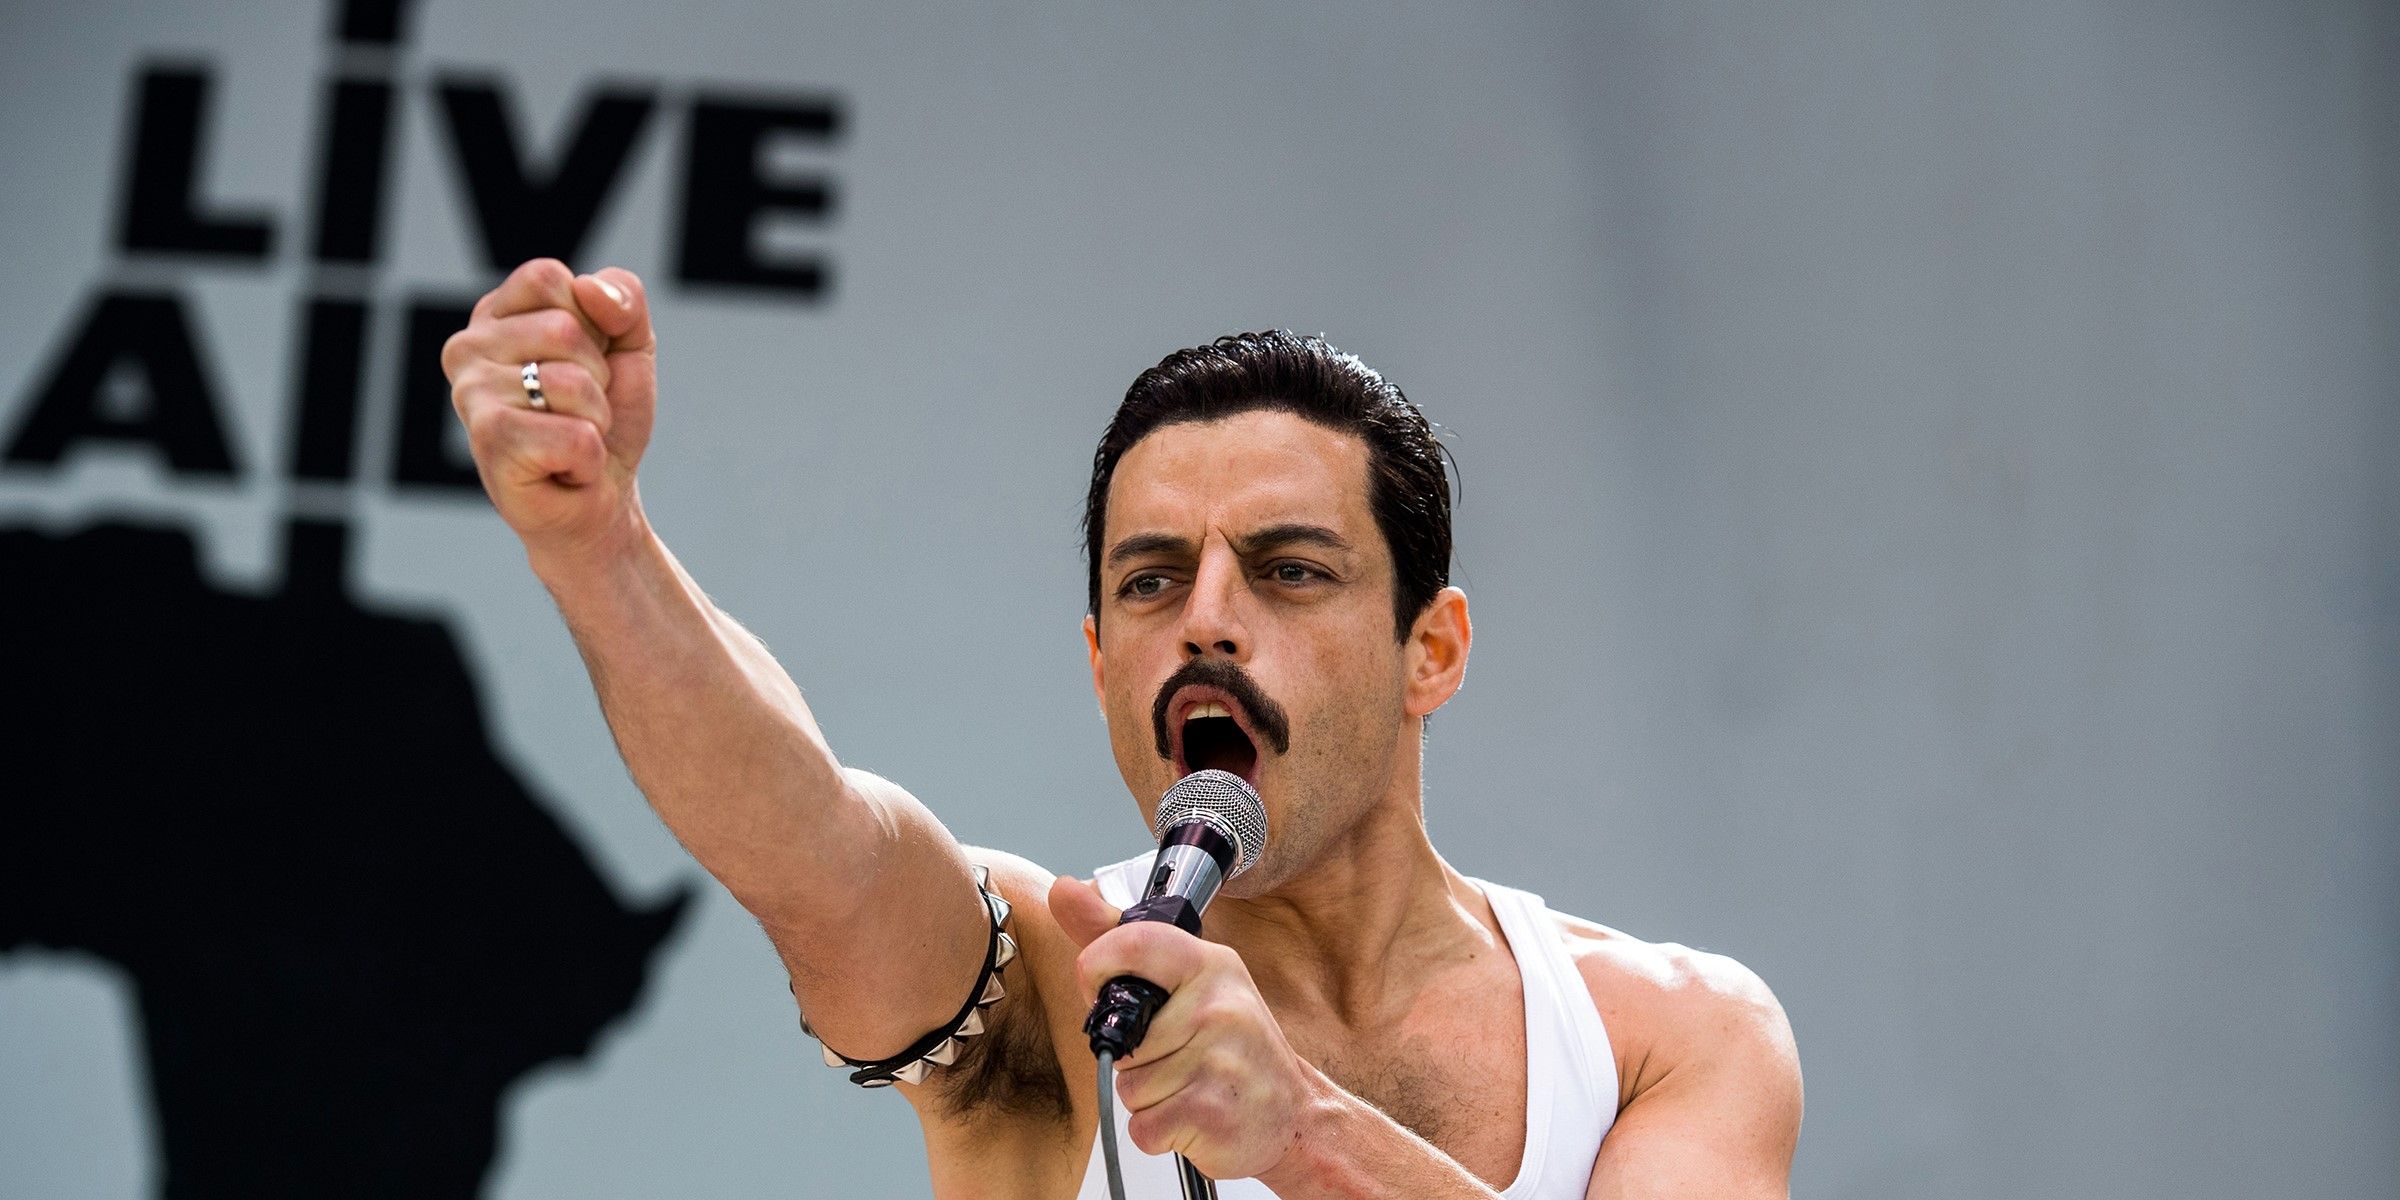 Freddie Mercury sings in Bohemian Rhapsody